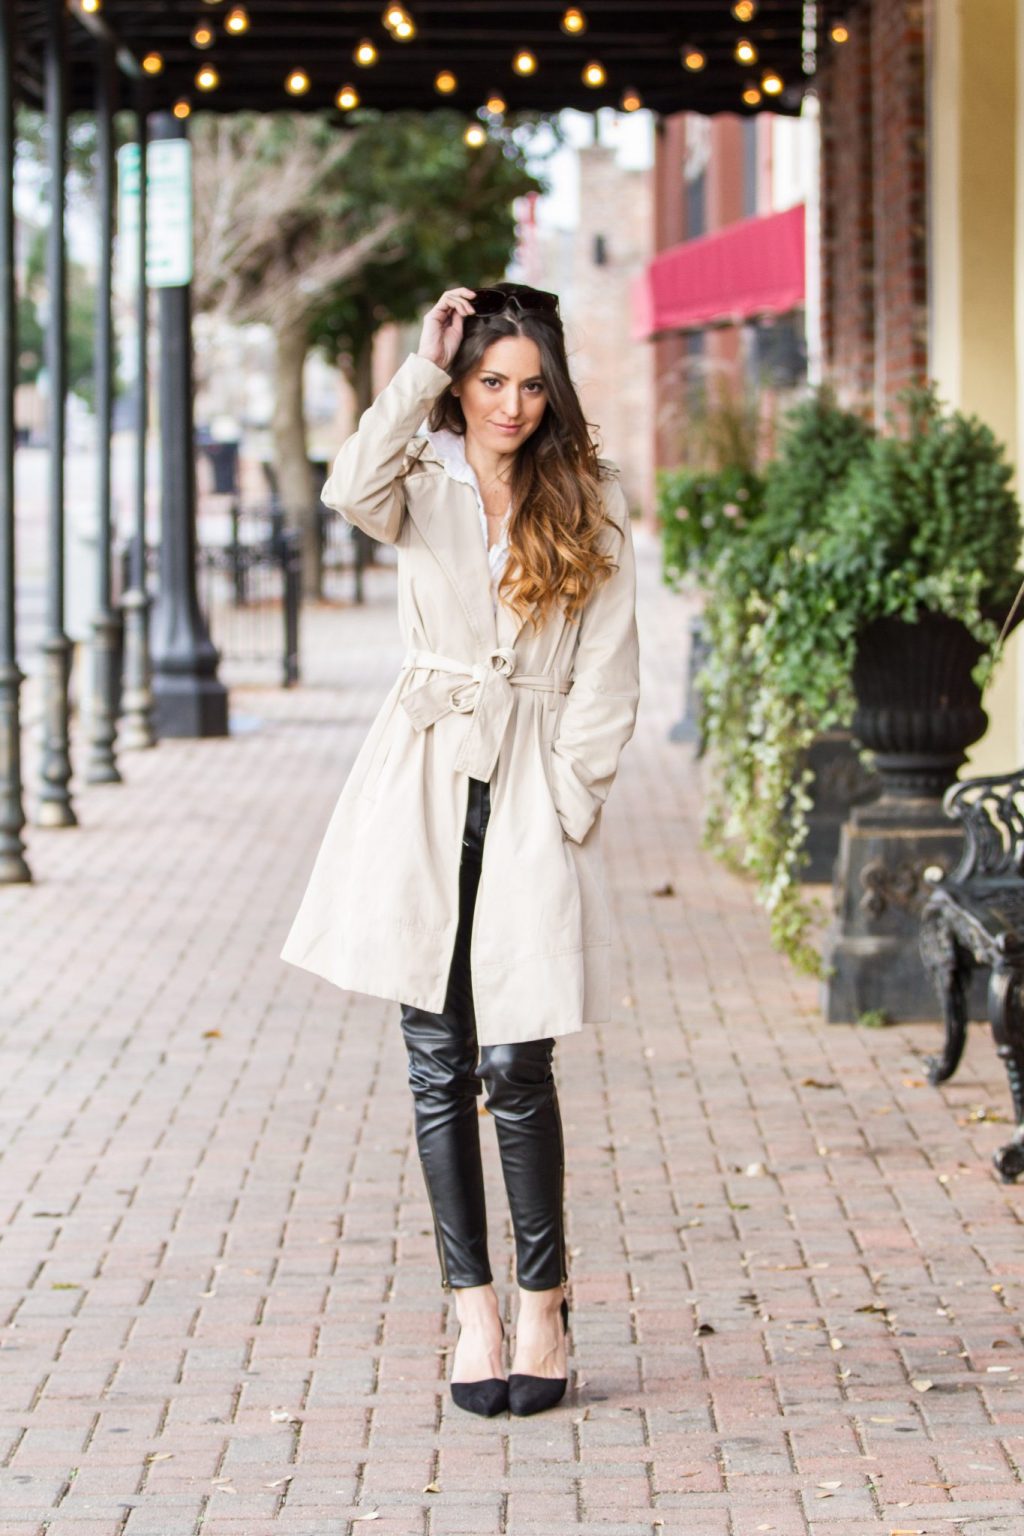 winter Wardrobe Staples, women's white button down, black faux leather pants, black pumps, beige trench coat, khaki trench coat